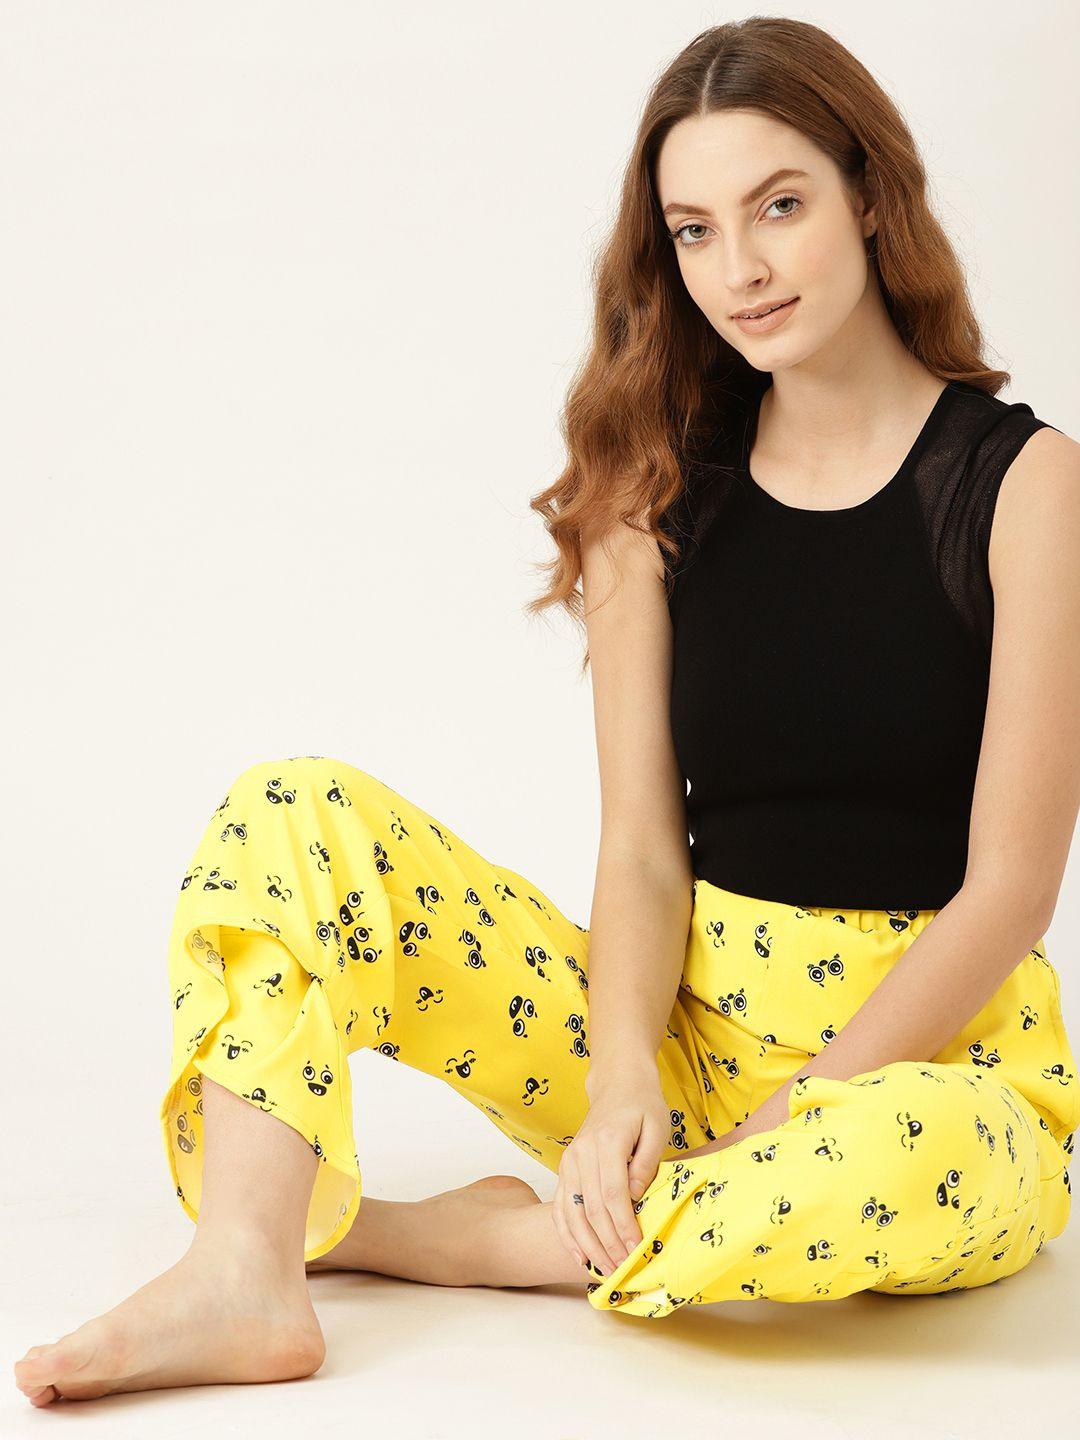 dressberry-women-yellow-and-black-conversational-print-lounge-pants